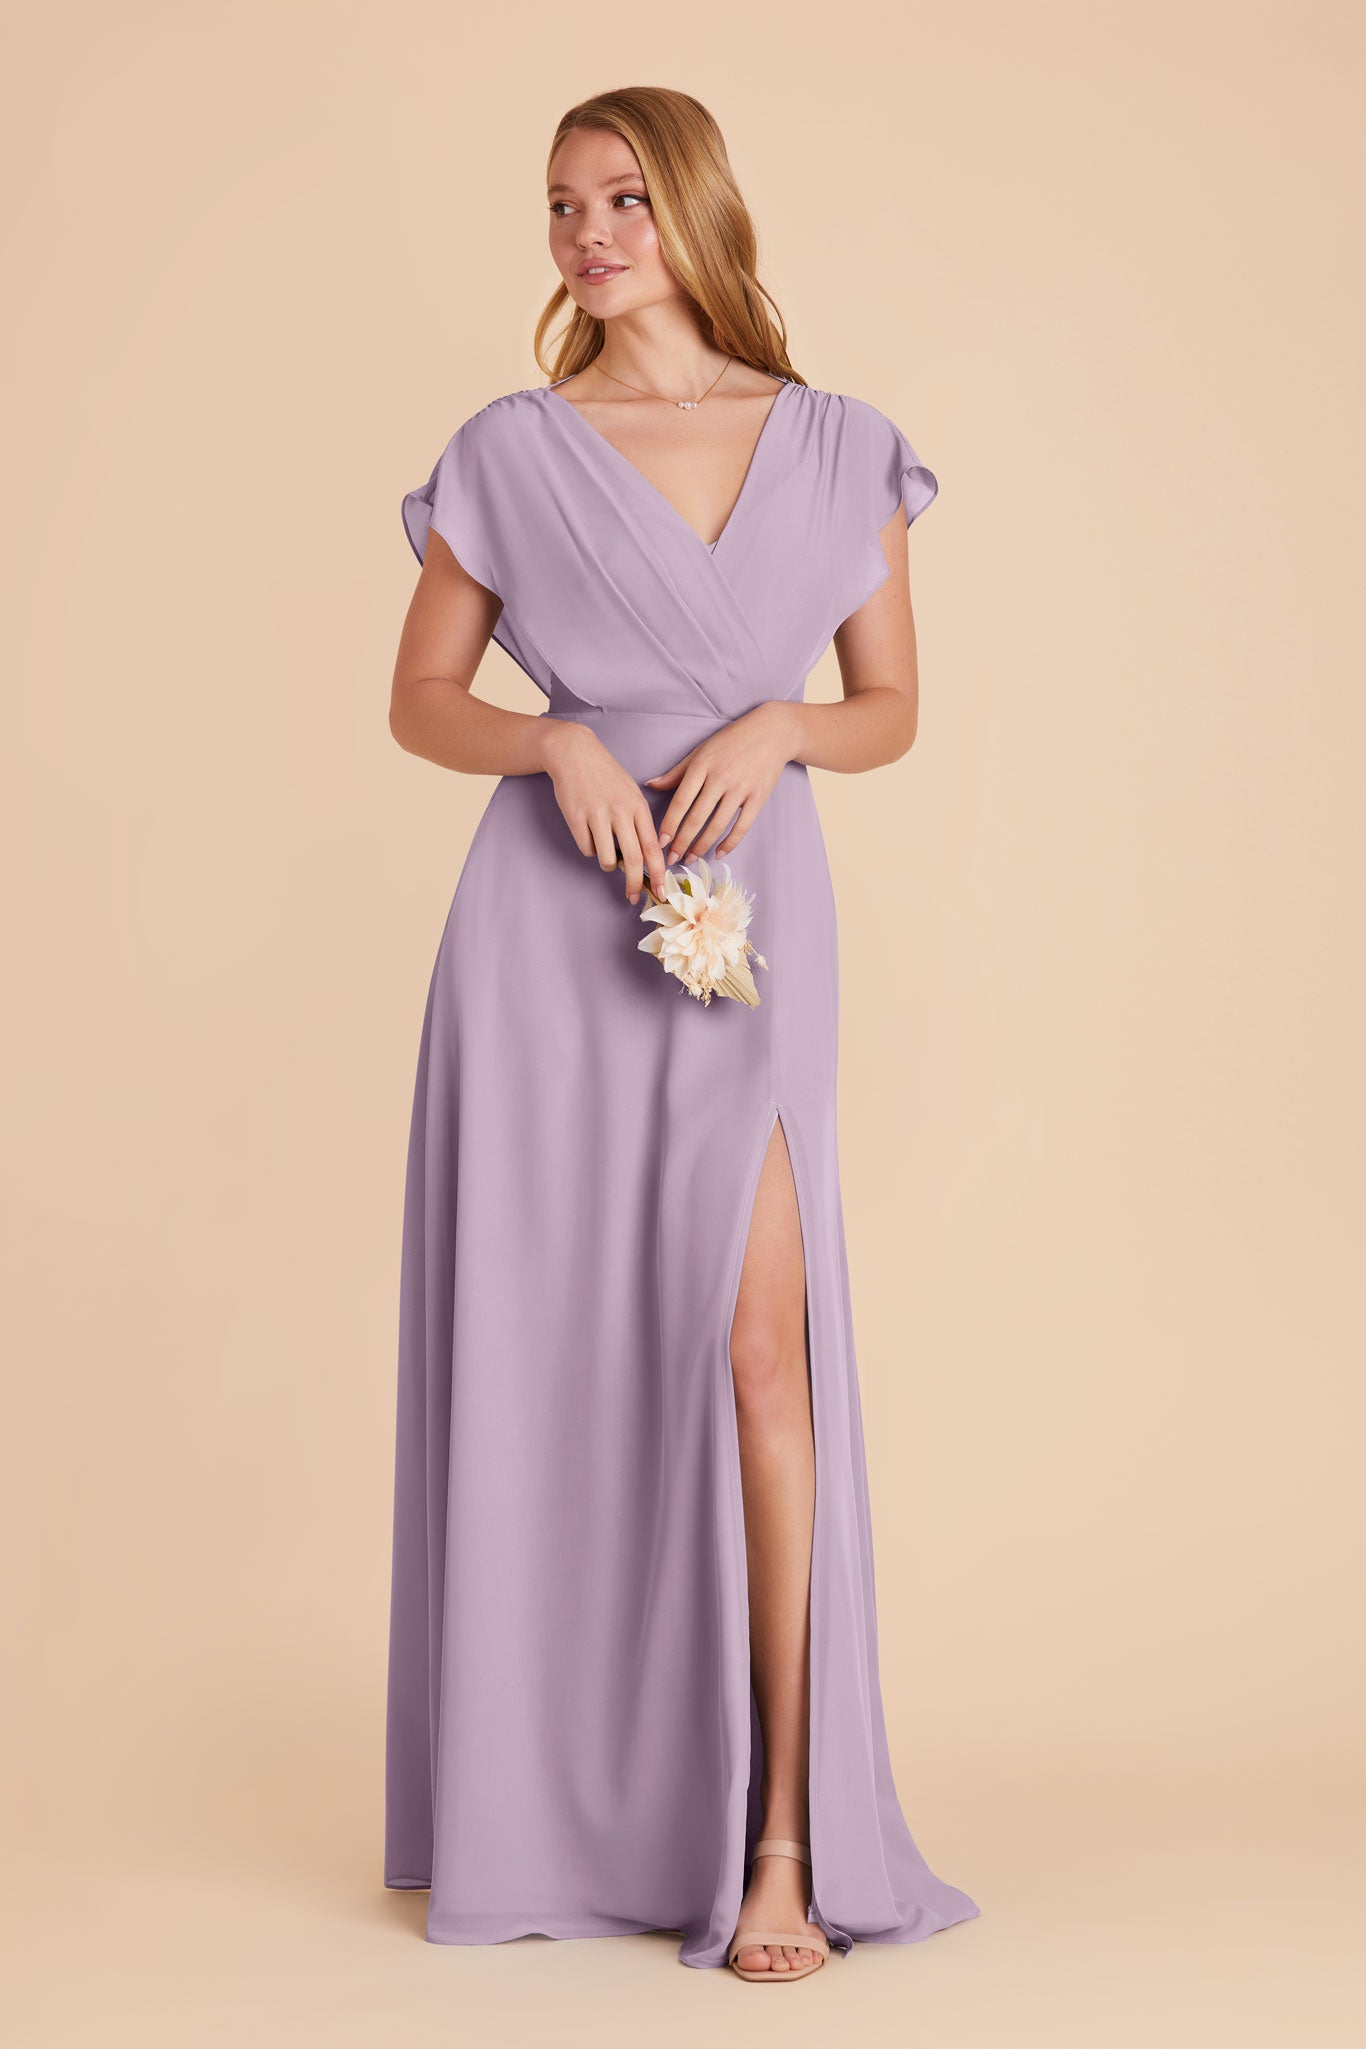 Violet Chiffon Dress - Lavender